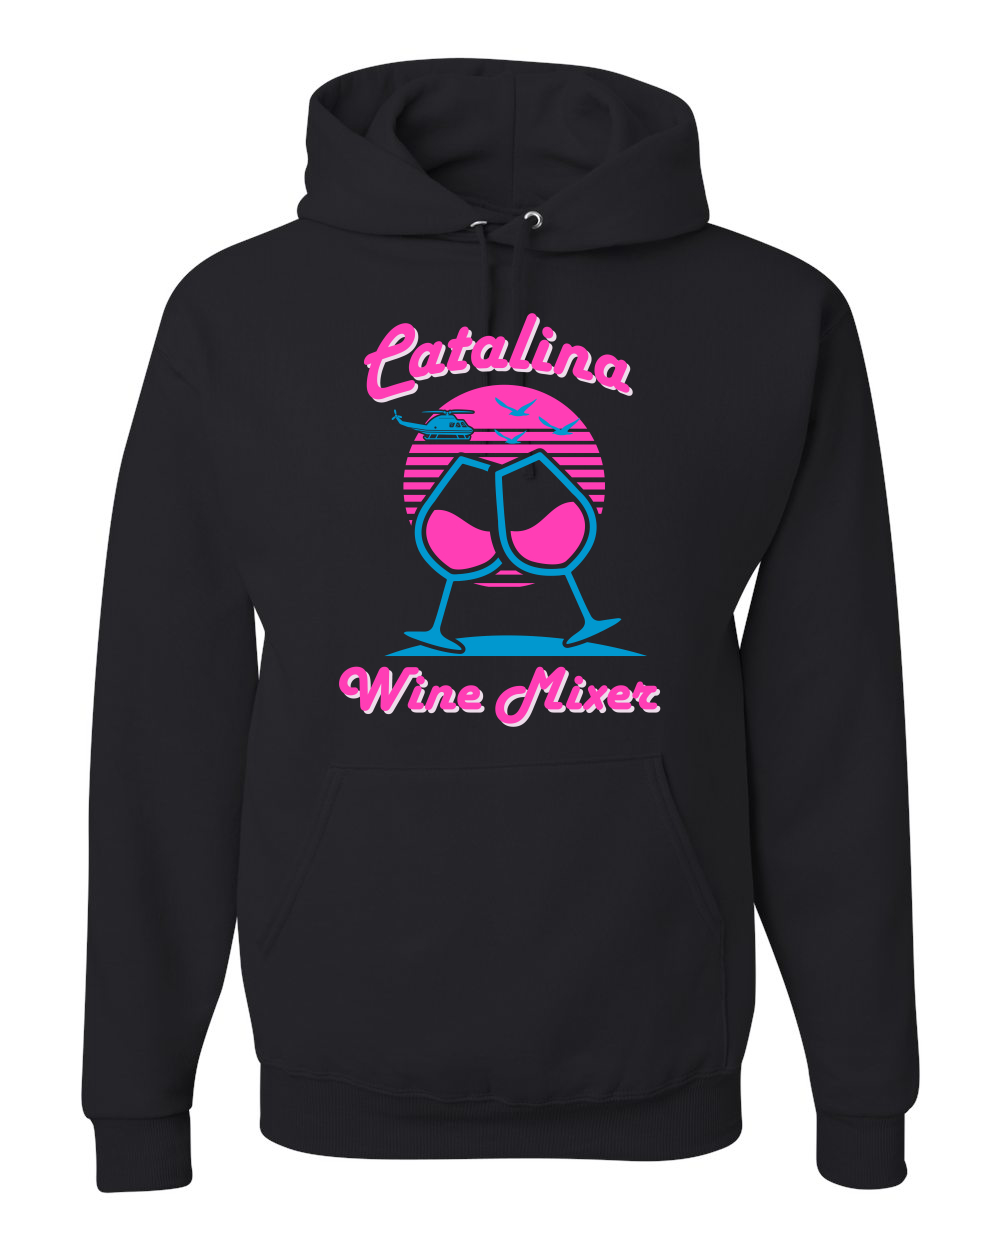 Catalina Wine Mixer Island Prestige Movie| Mens Pop Culture Hooded Sweatshirt Graphic Hoodie, Black, Small - image 1 of 4